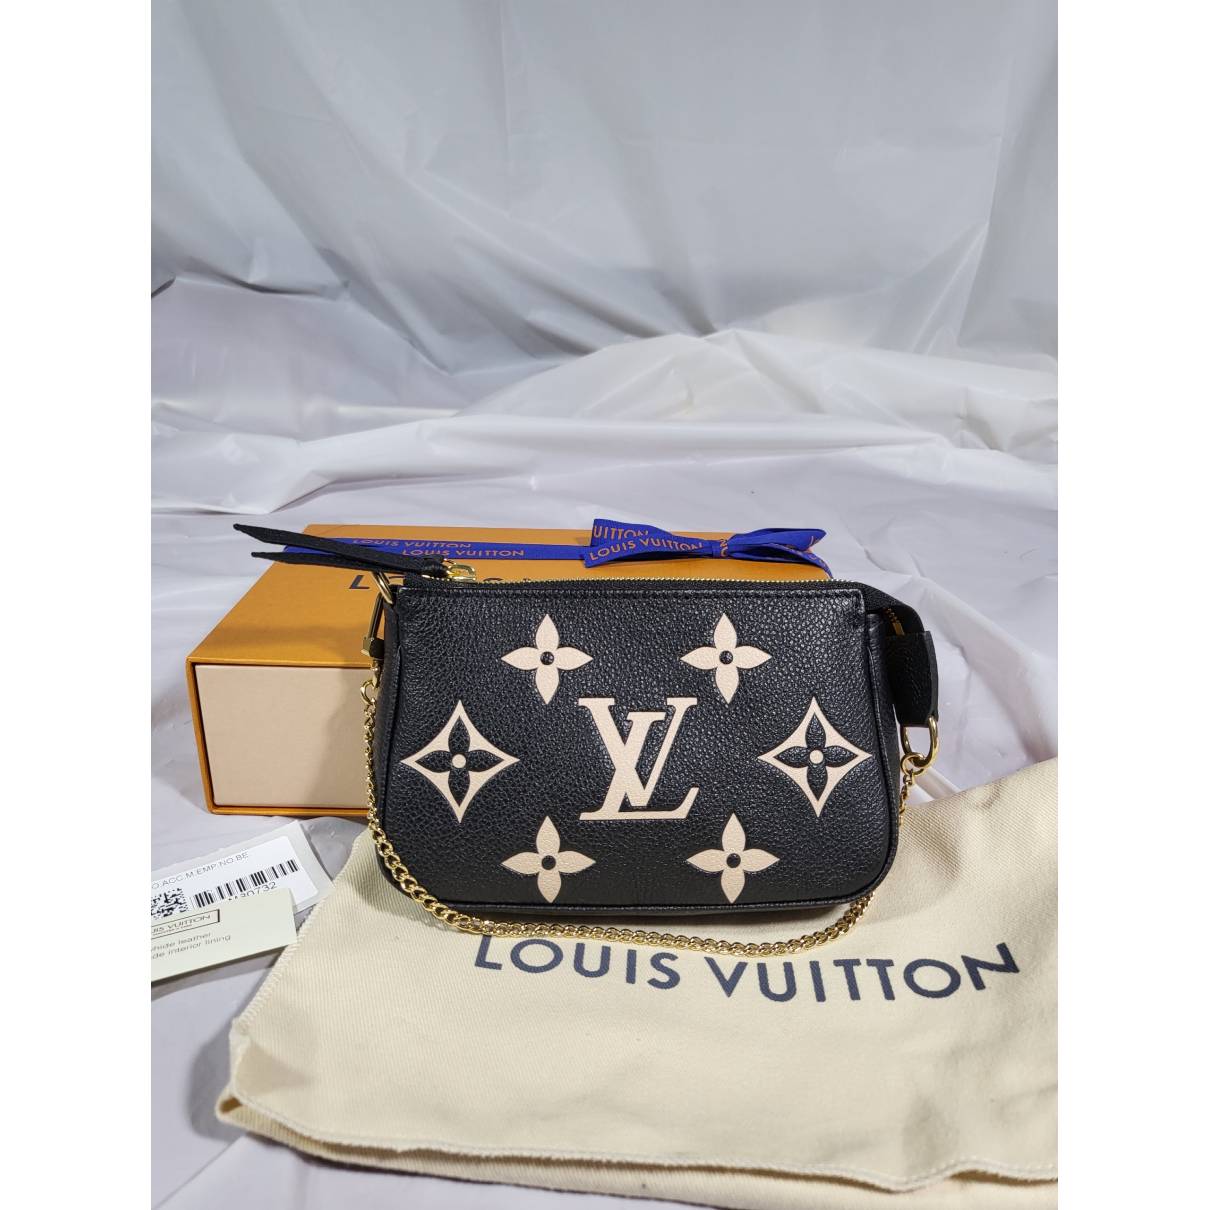 Louis Vuitton Mini Pochette in Black with Blue Monogram - SOLD